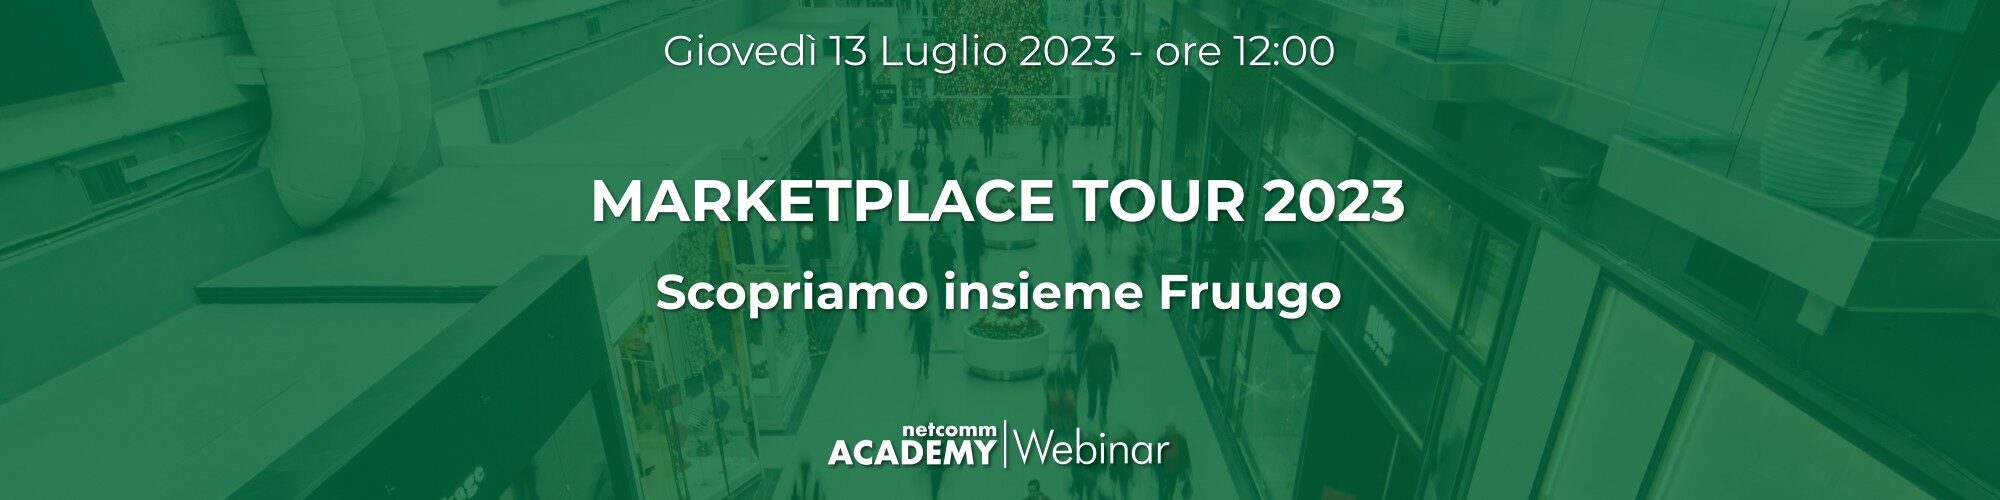 Marketplace Tour 2023: scopriamo insieme Fruugo